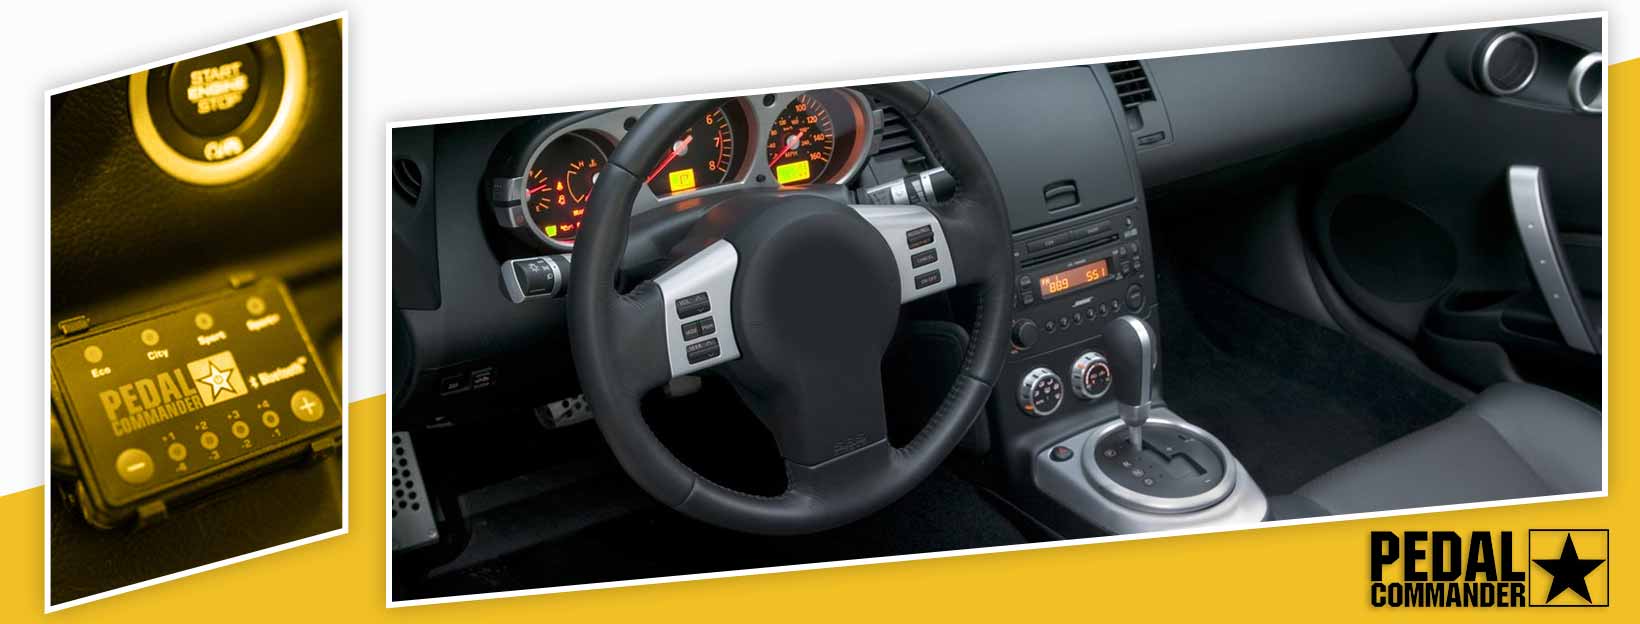 Pedal Commander for Nissan 370Z - interior